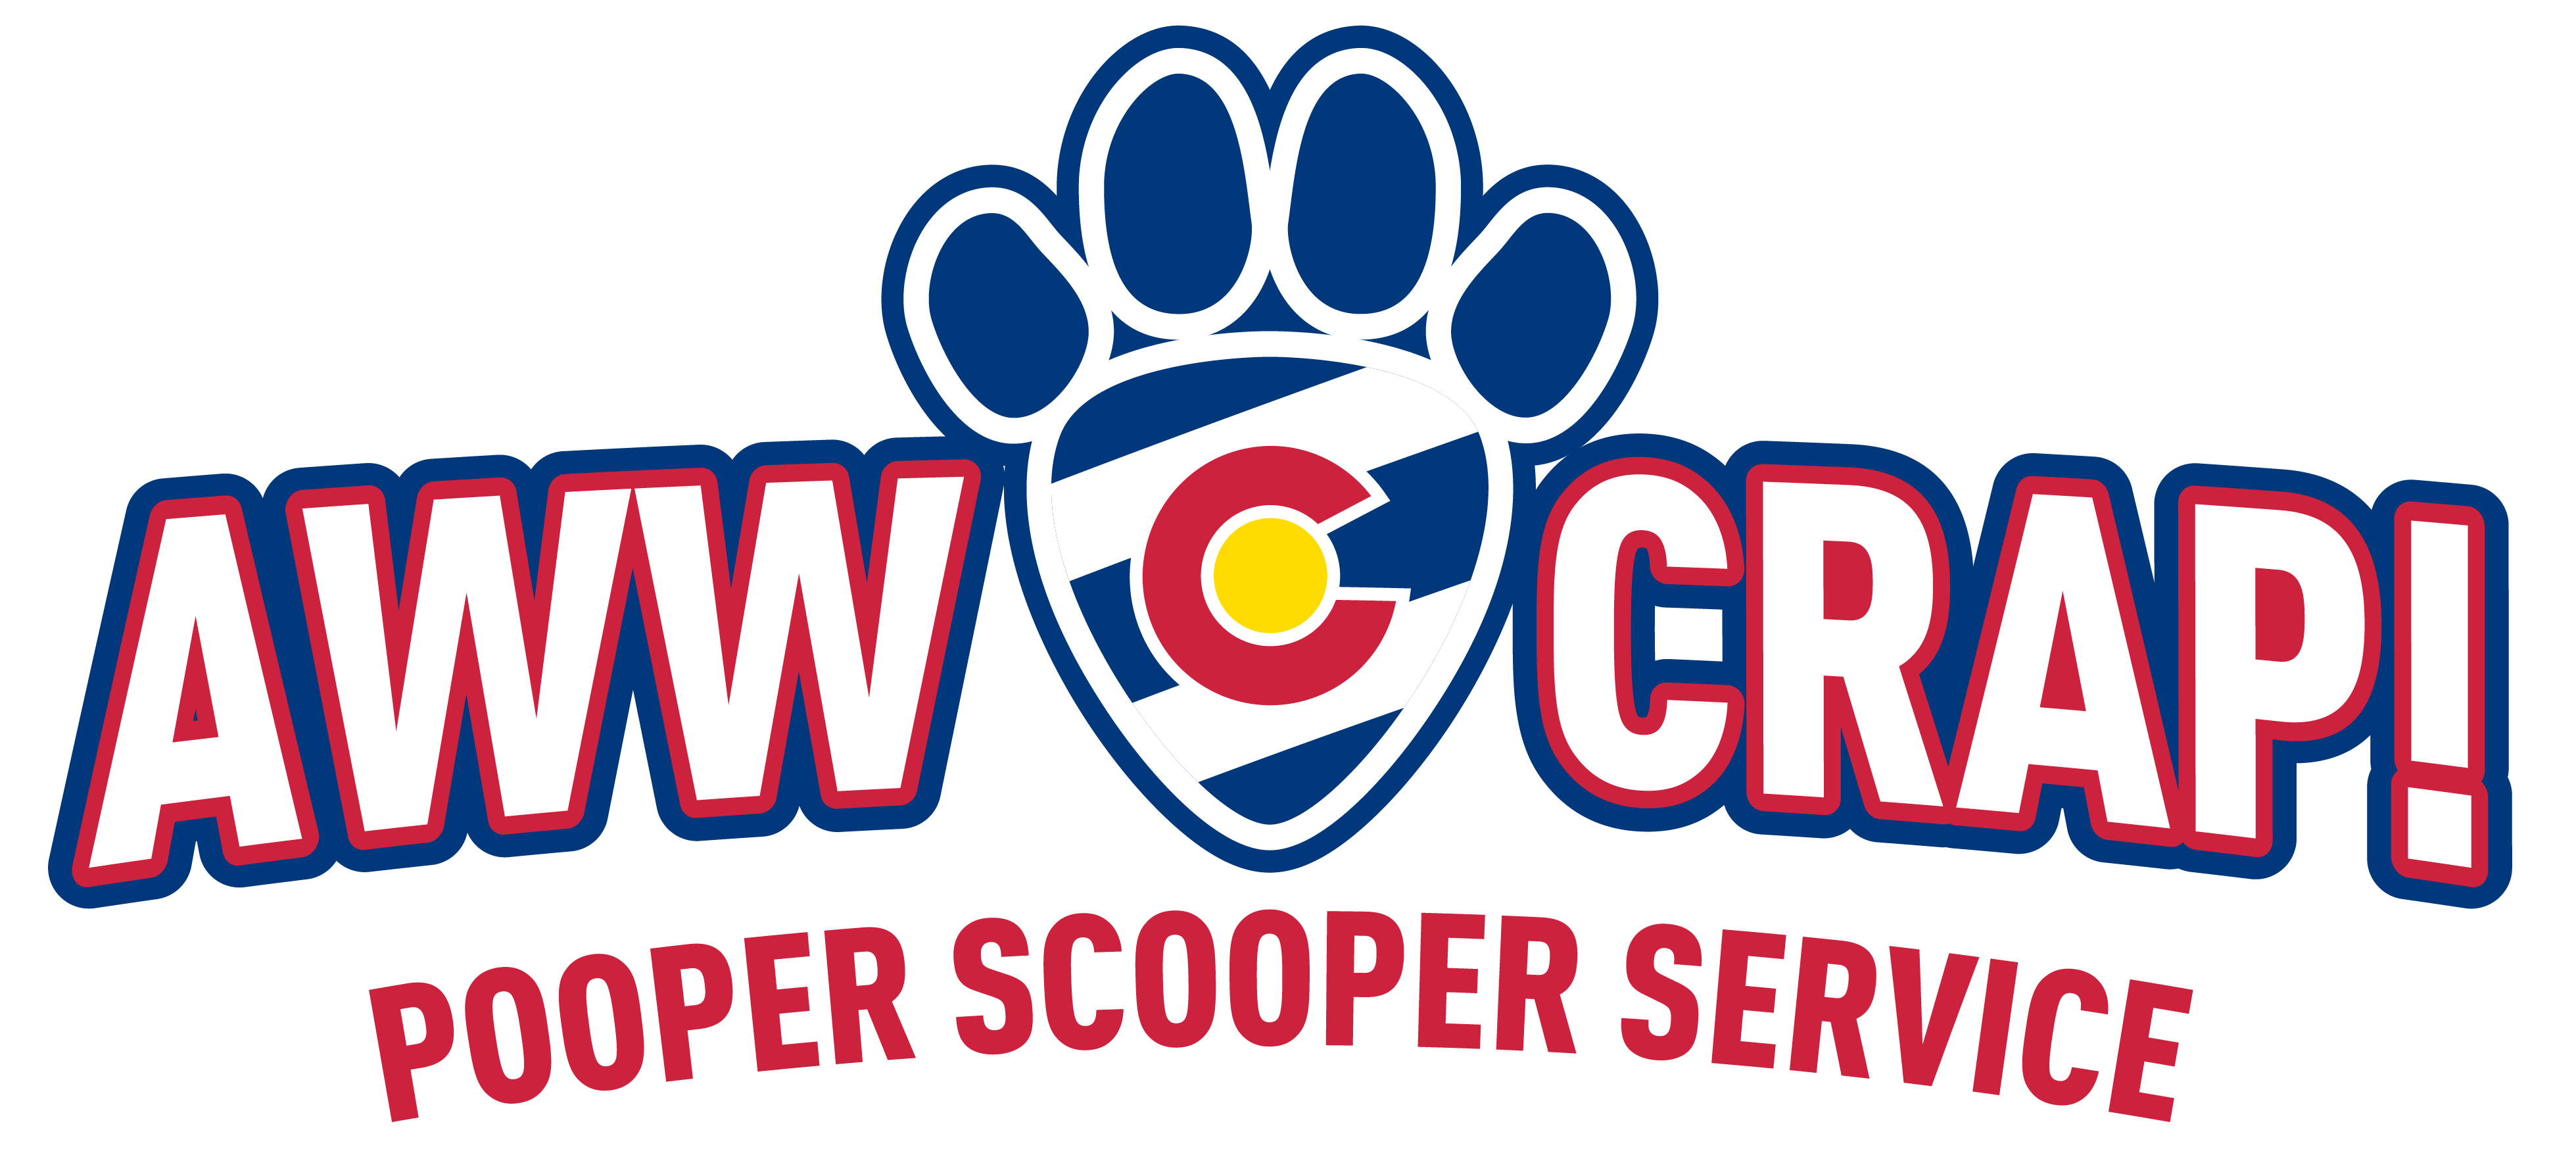 Pooper Scooper Service